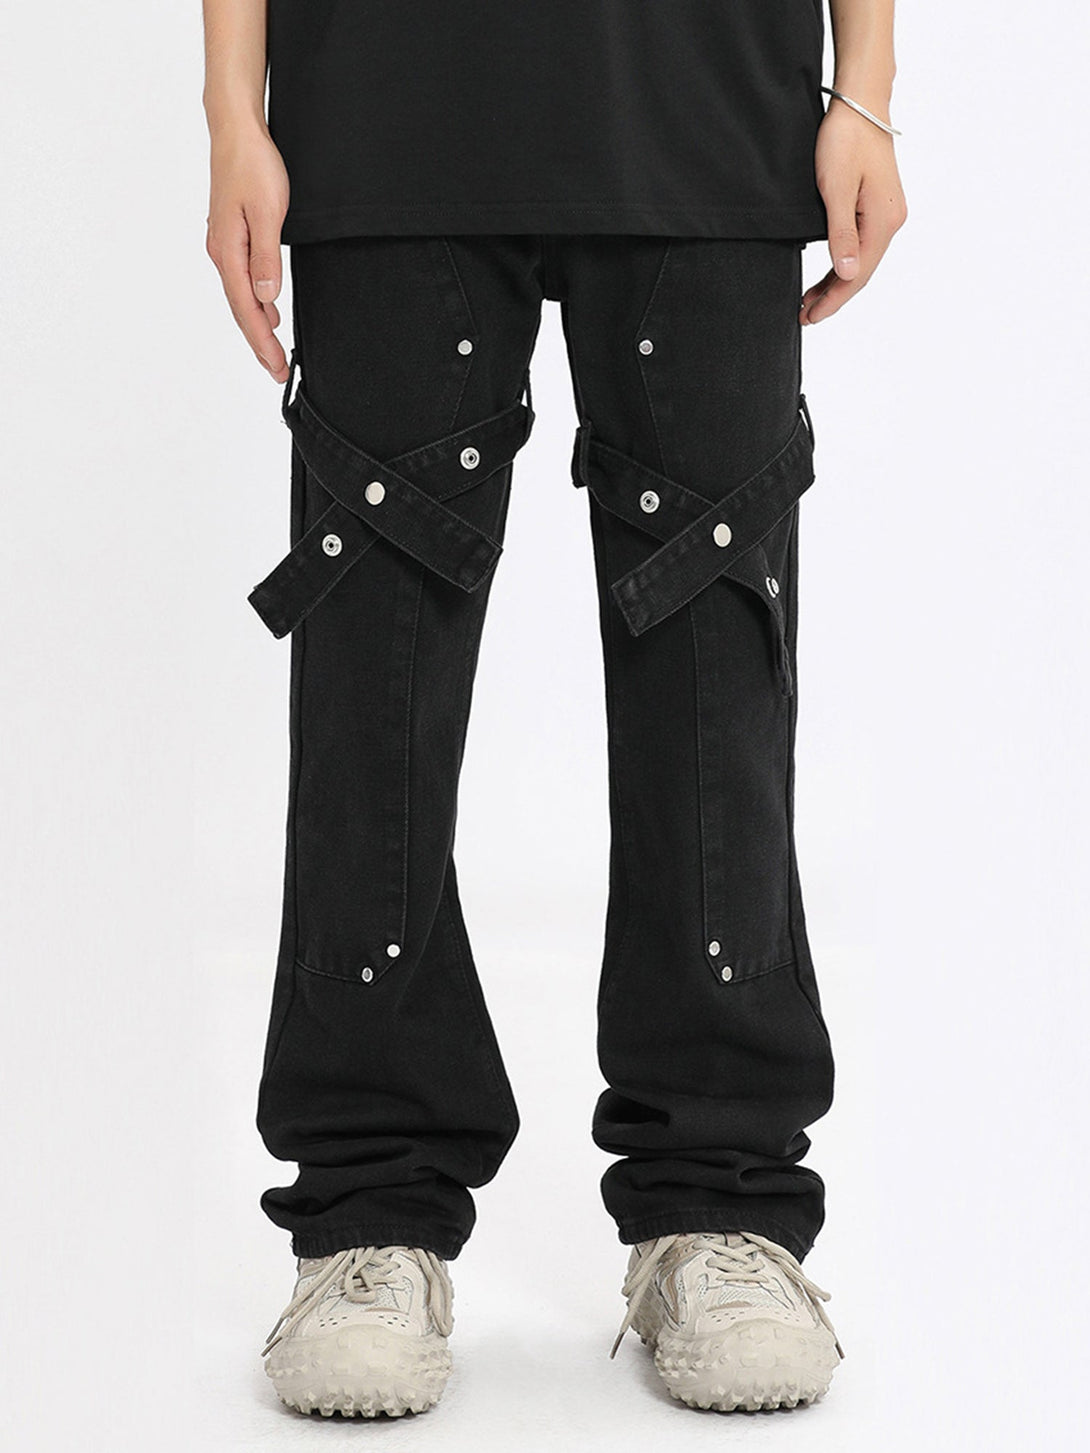 Majesda® - High Street Strappy Straight Leg Casual Work Jeans- Outfit Ideas - Streetwear Fashion - majesda.com